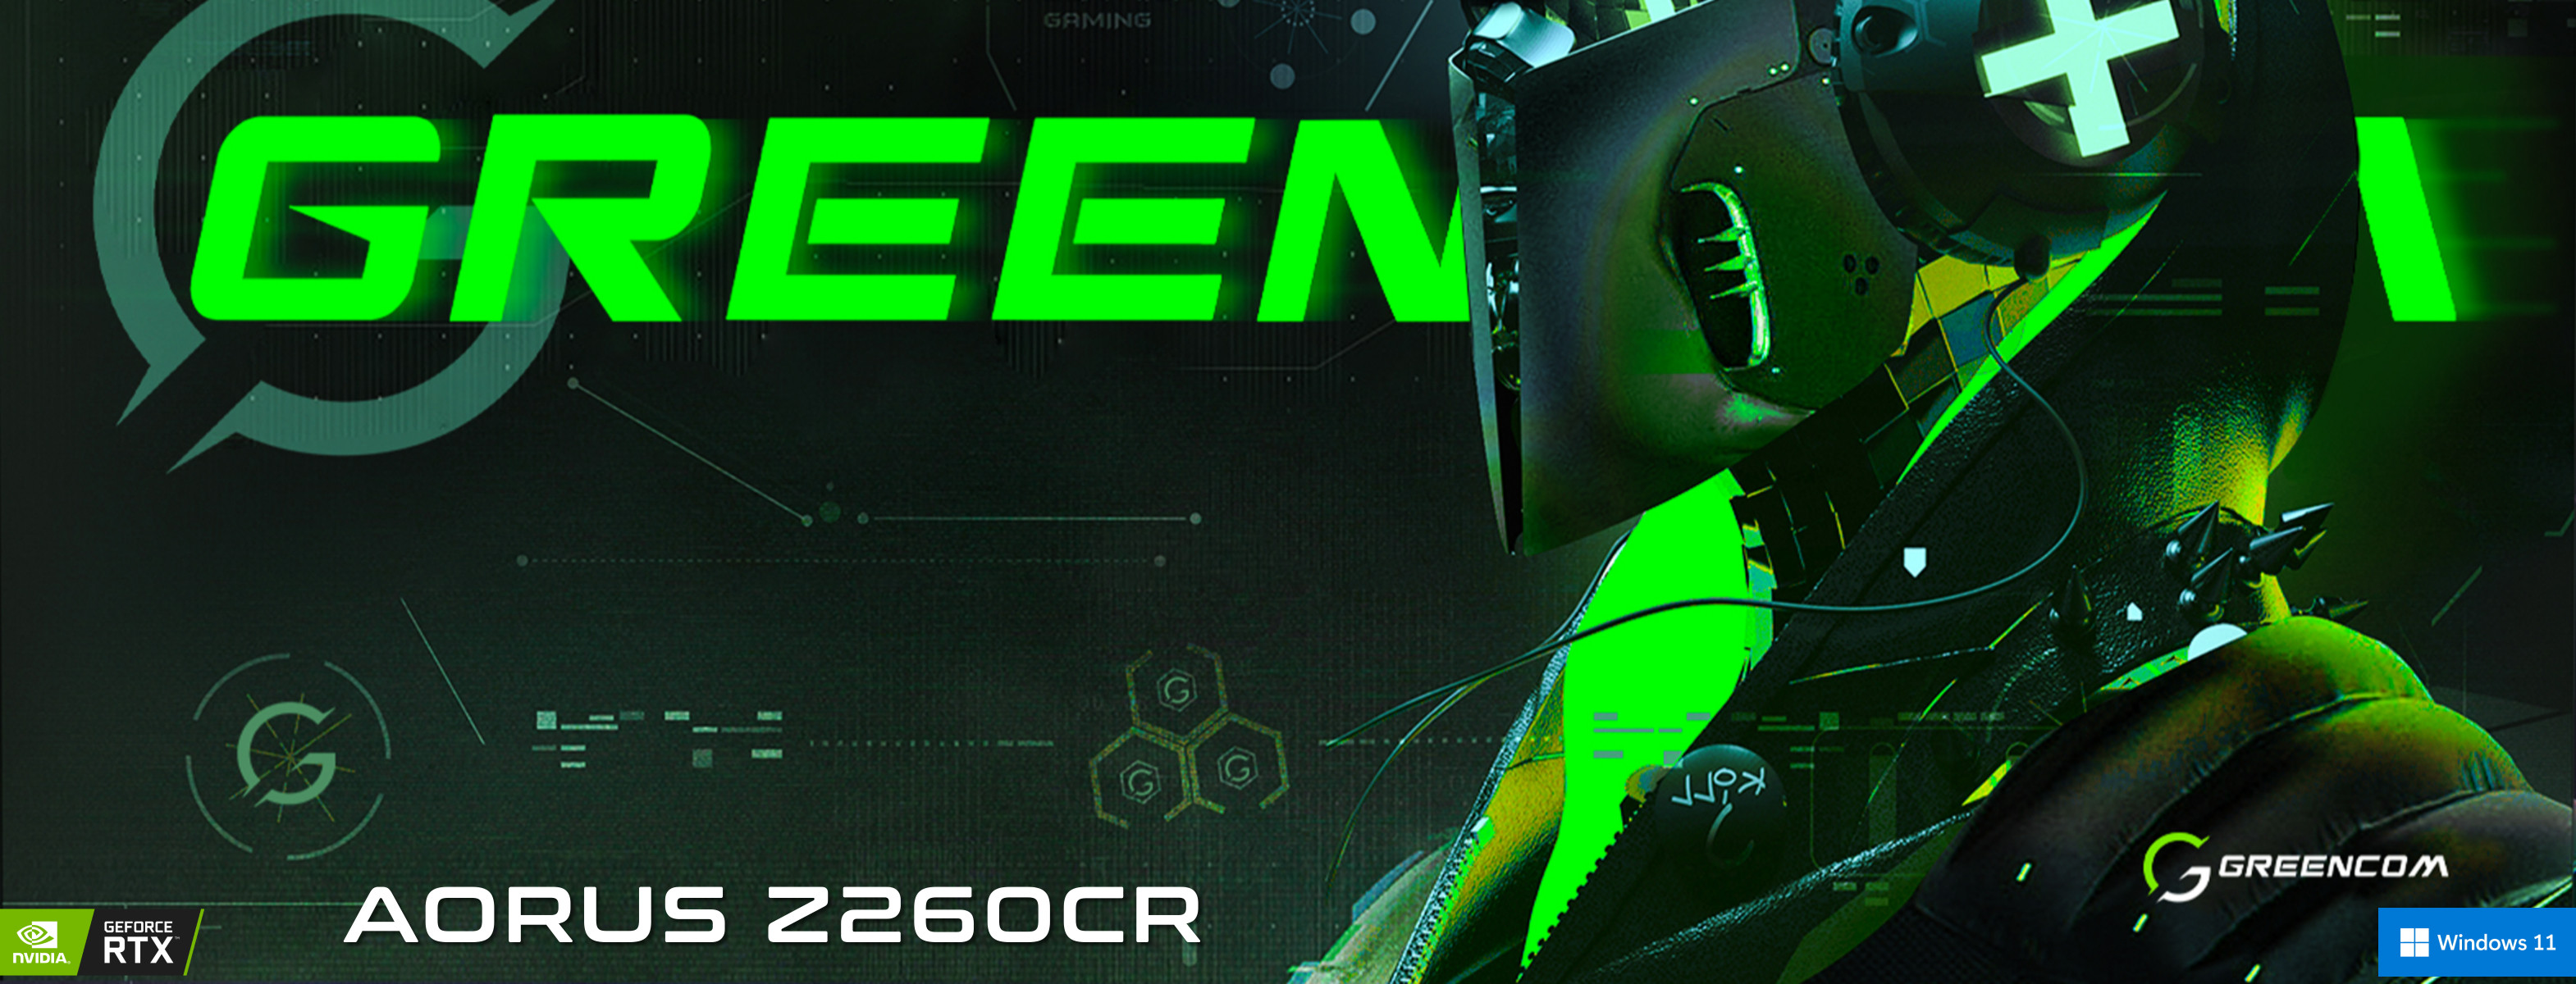 Greencom Aorus Z260CR